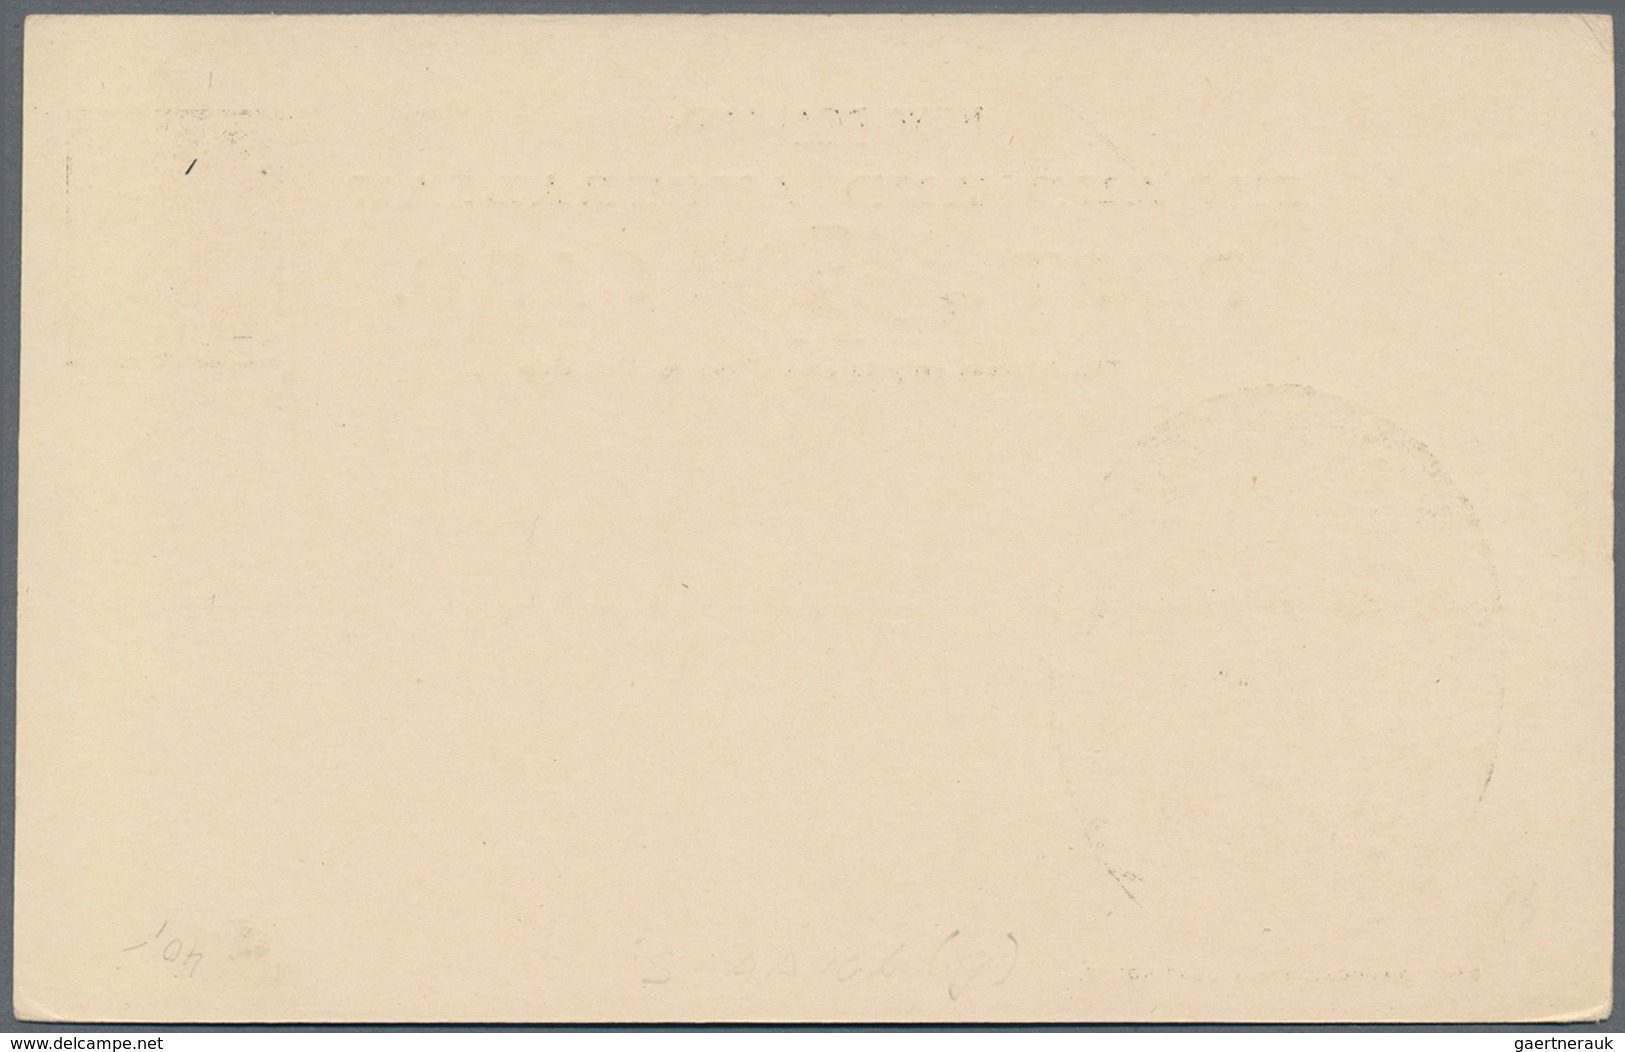 Neuseeland - Ganzsachen: 1901, eight different pictorial stat. postcards QV 1d. brown with Boer War